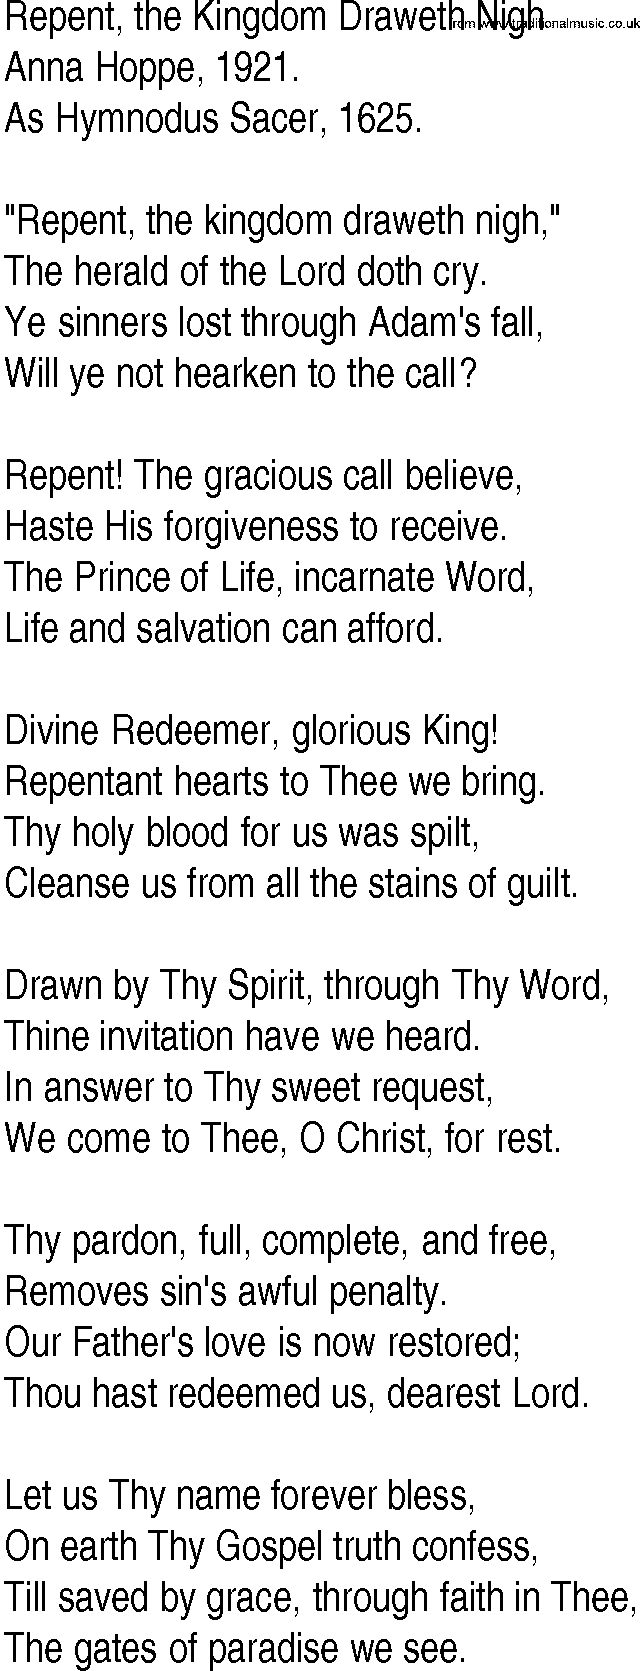 Hymn and Gospel Song: Repent, the Kingdom Draweth Nigh by Anna Hoppe lyrics